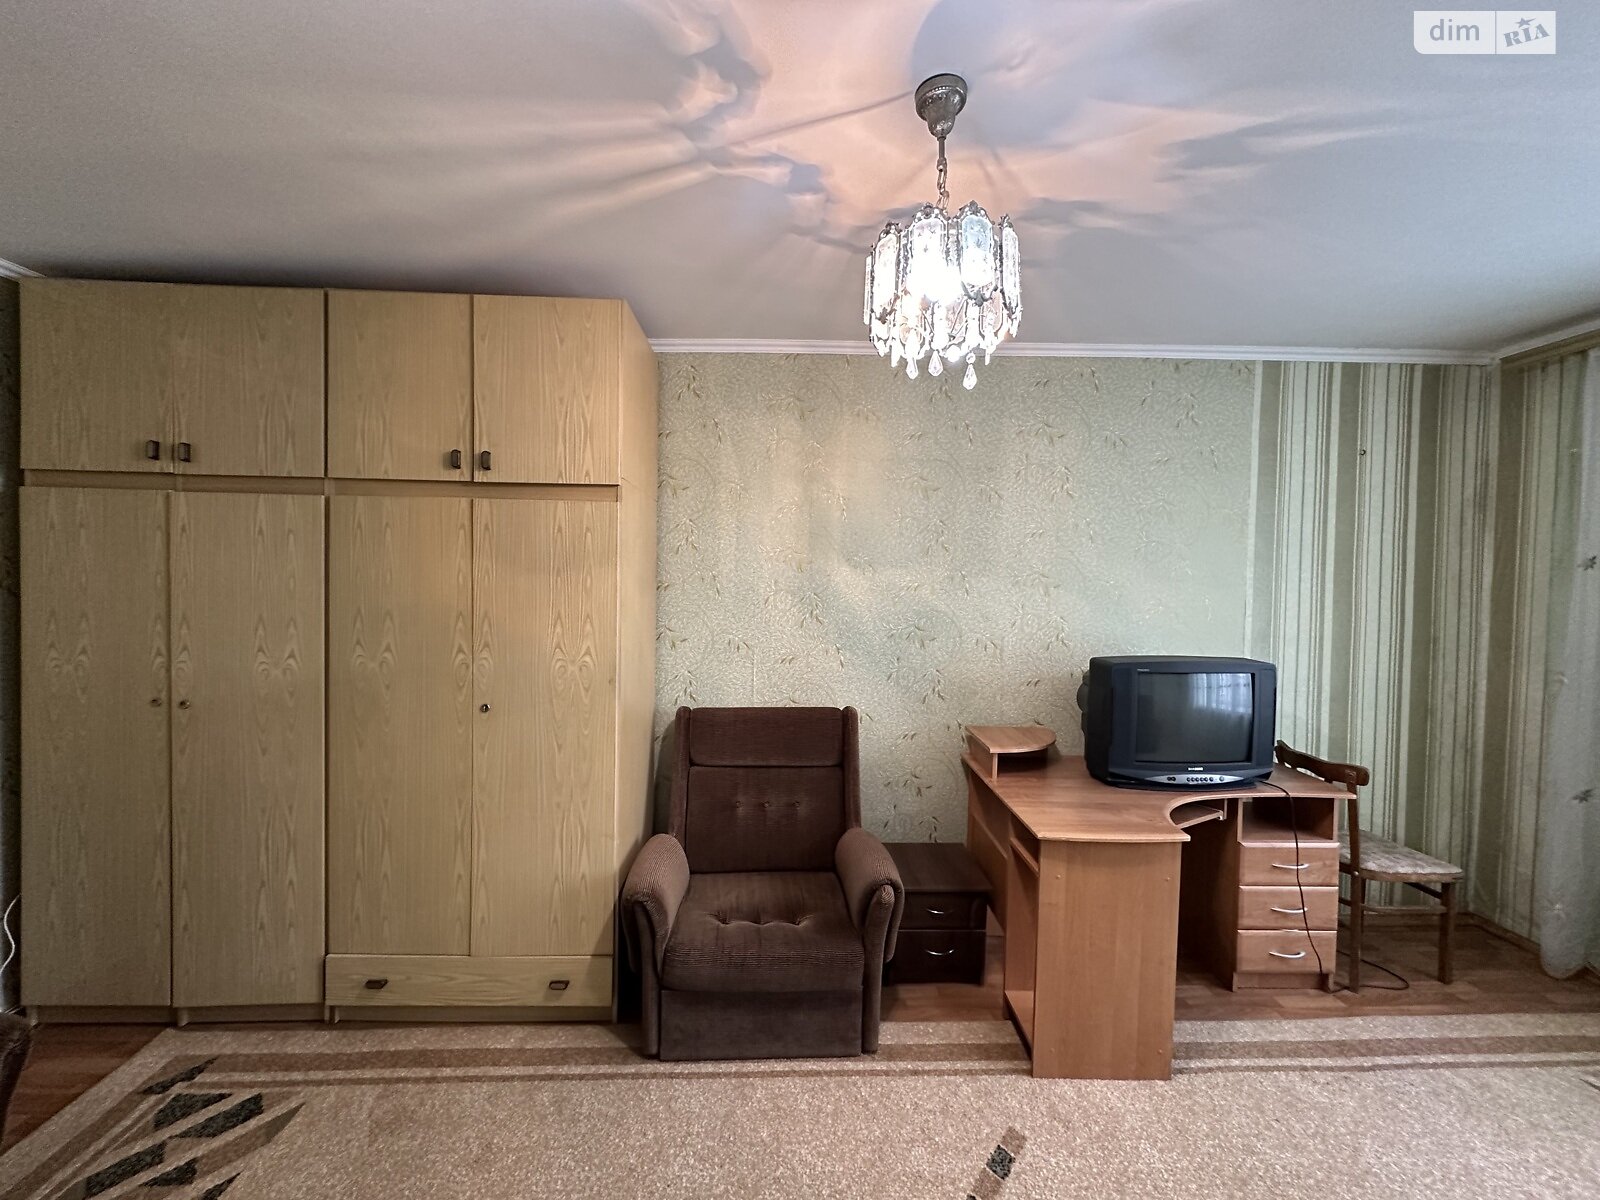 Продажа двухкомнатной квартиры в Ровно, на ул. Фабричная 4А, район Ленокомбинат фото 1